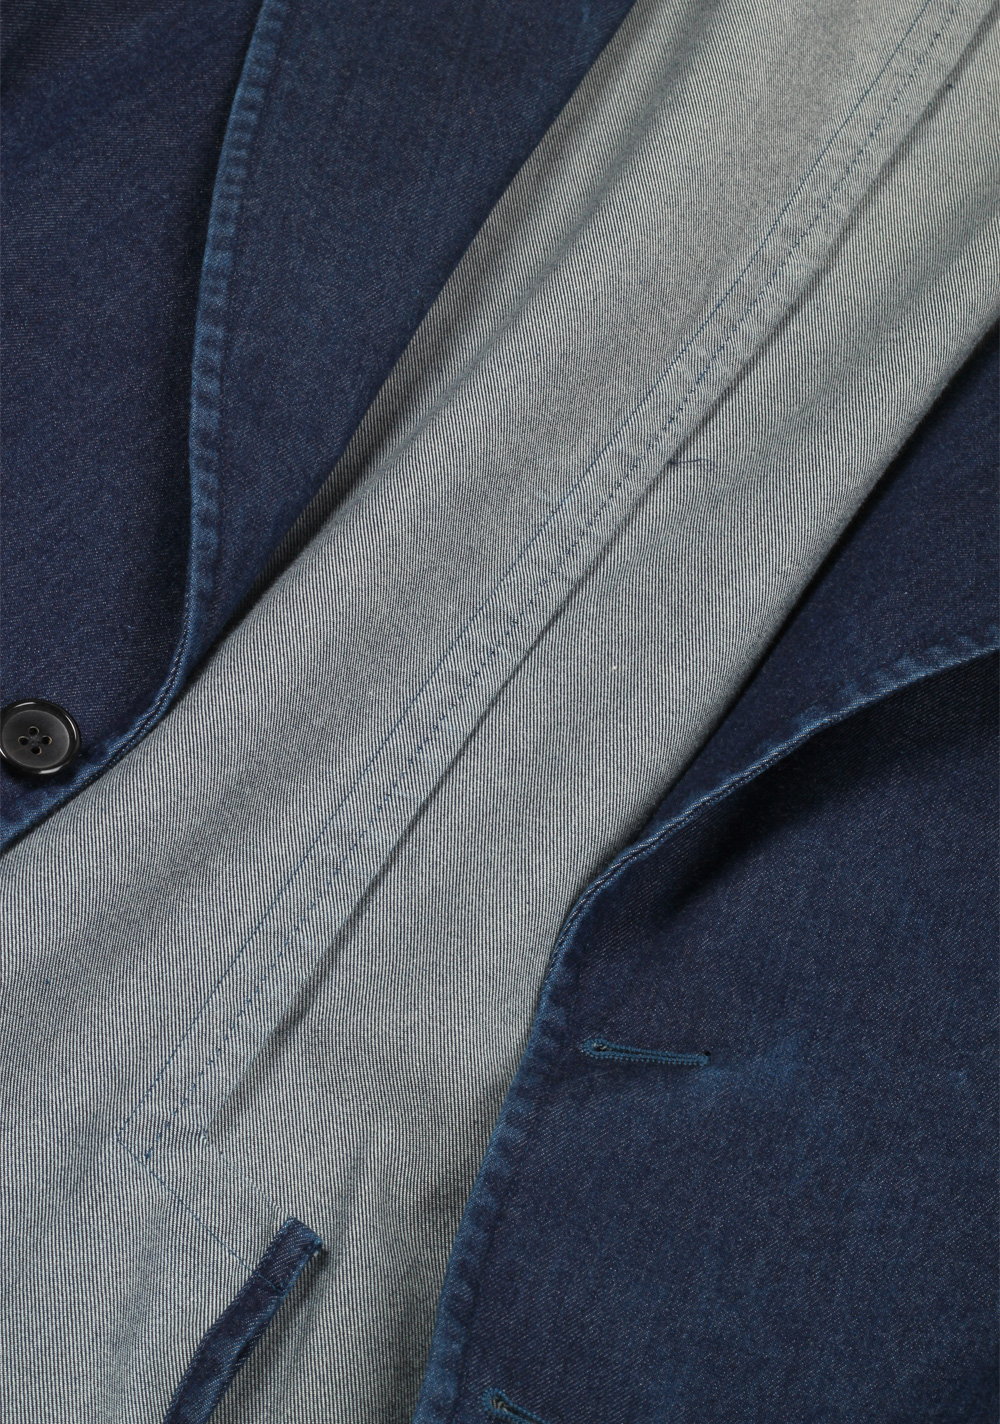 TOM FORD Shelton Blue Denim Sport Coat Size 48 / 38R U.S. | Costume Limité